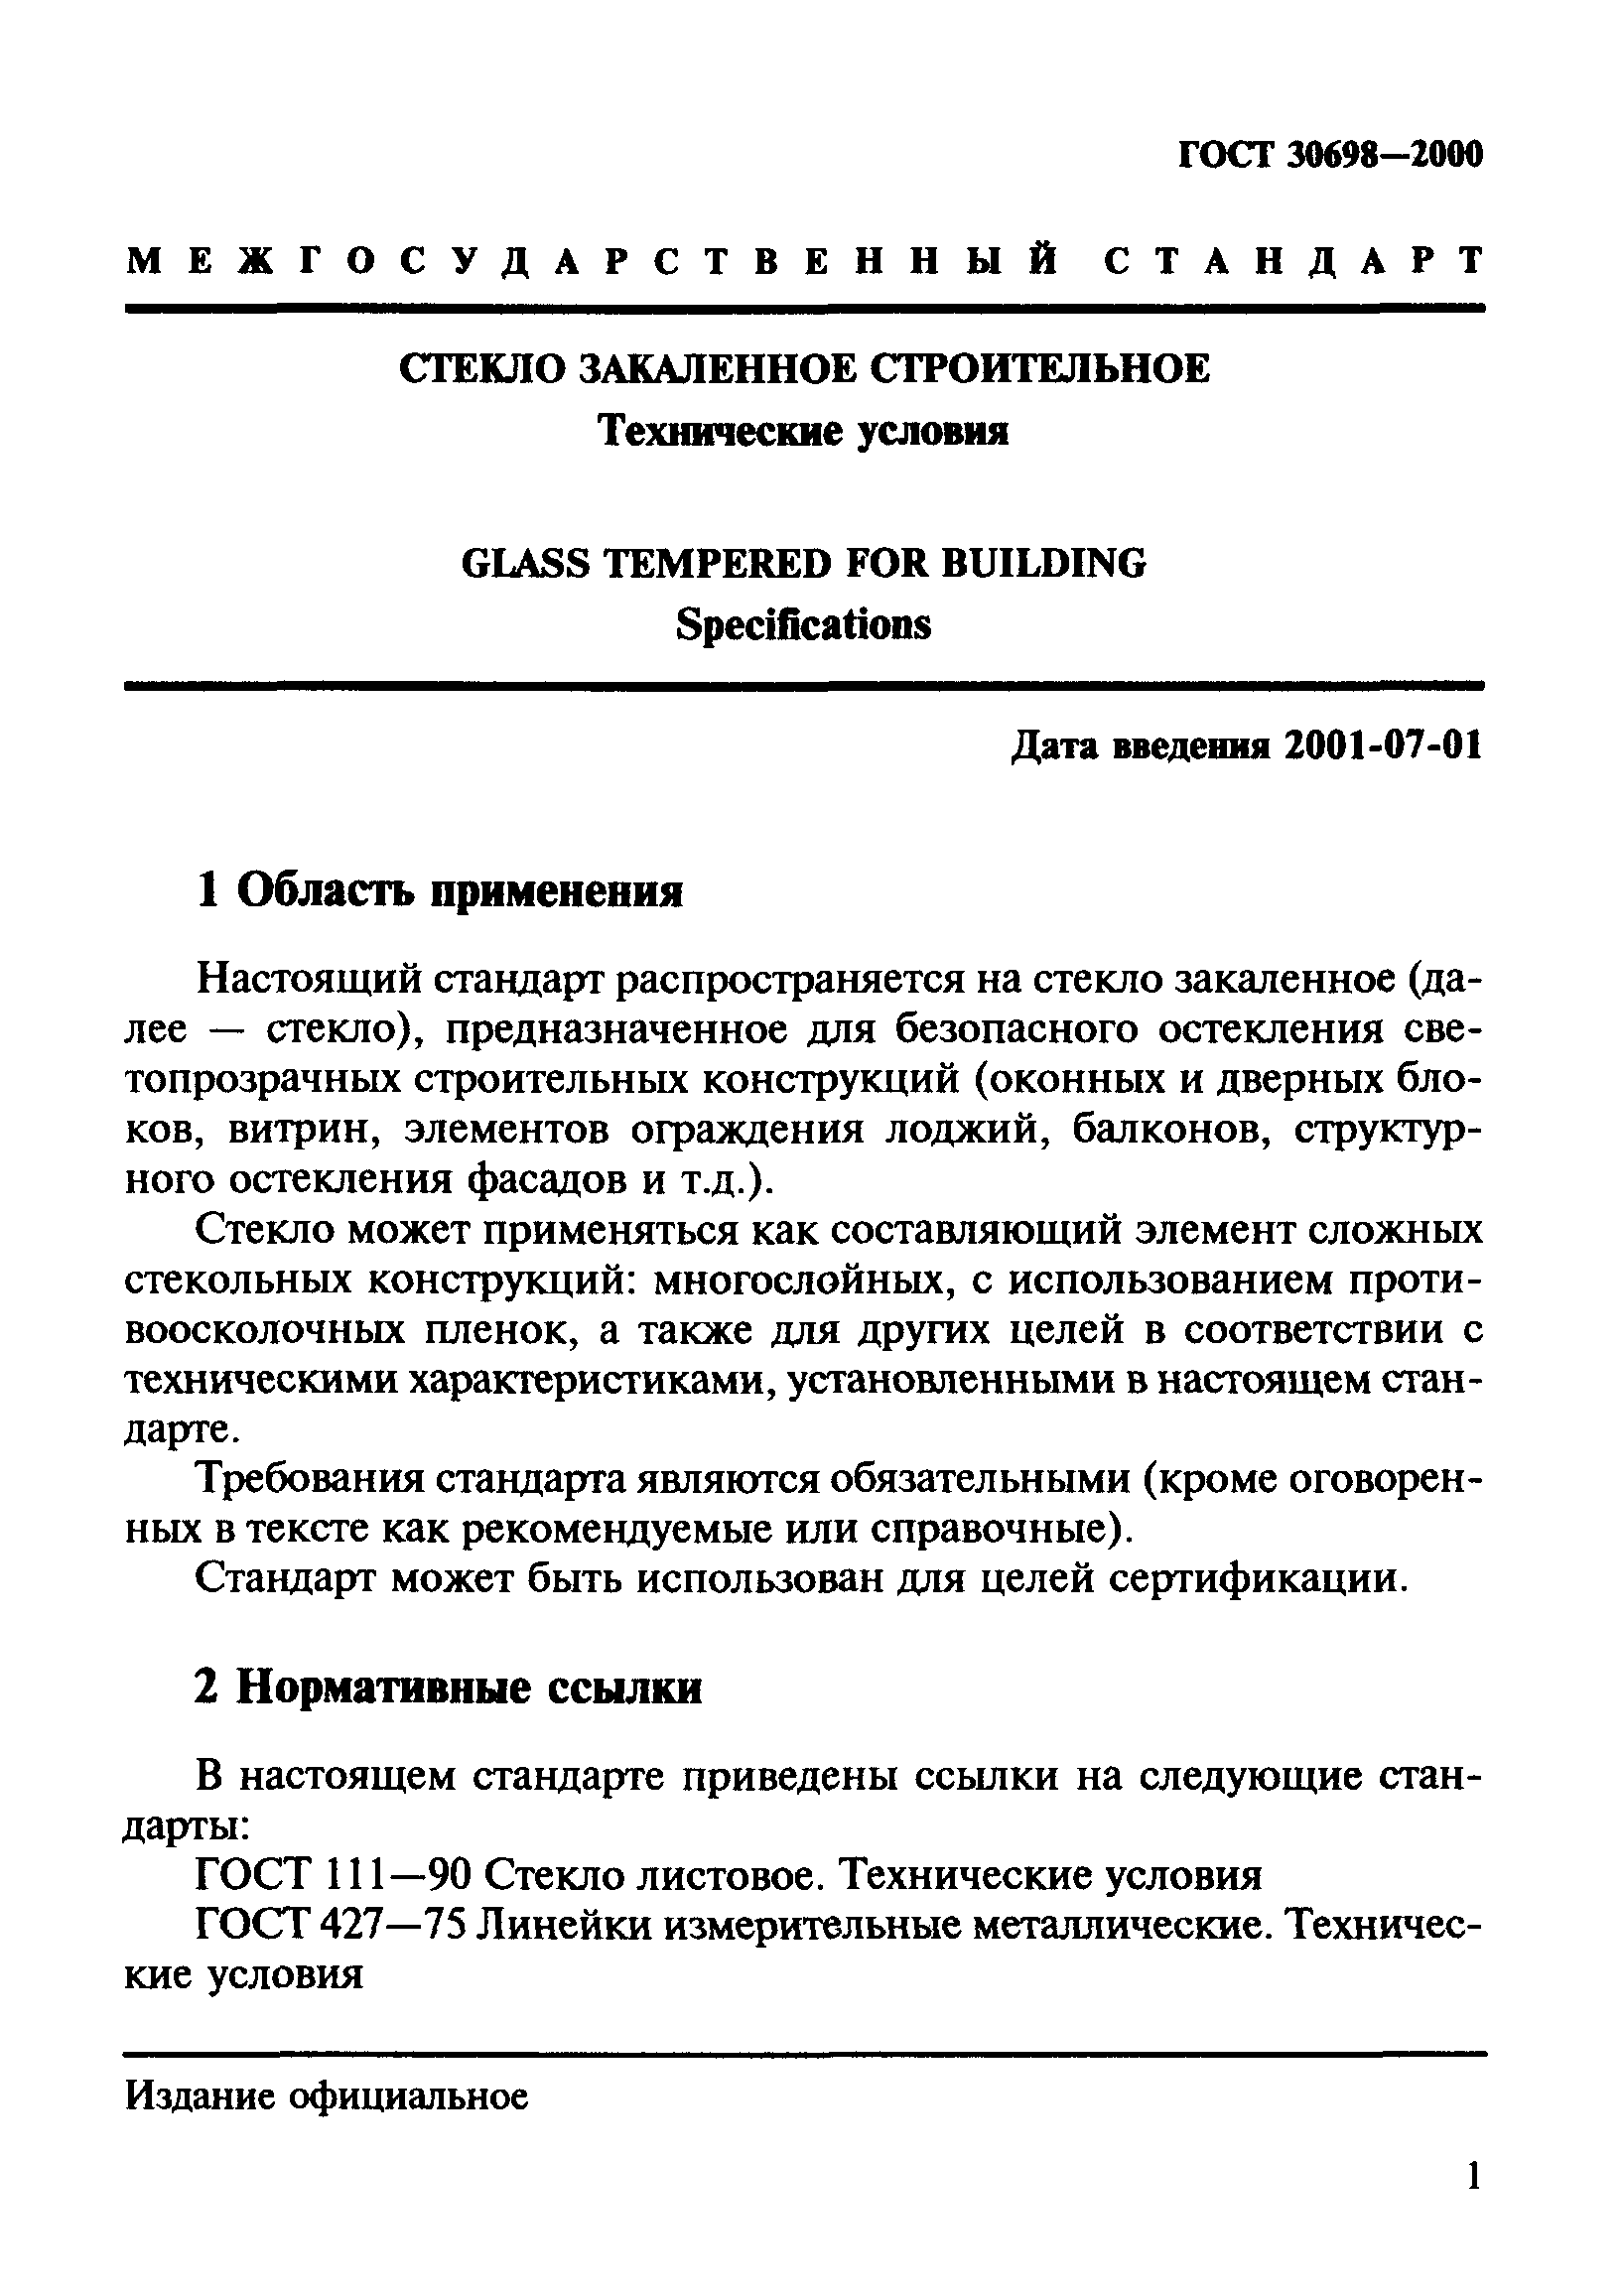 ГОСТ 30698-2000